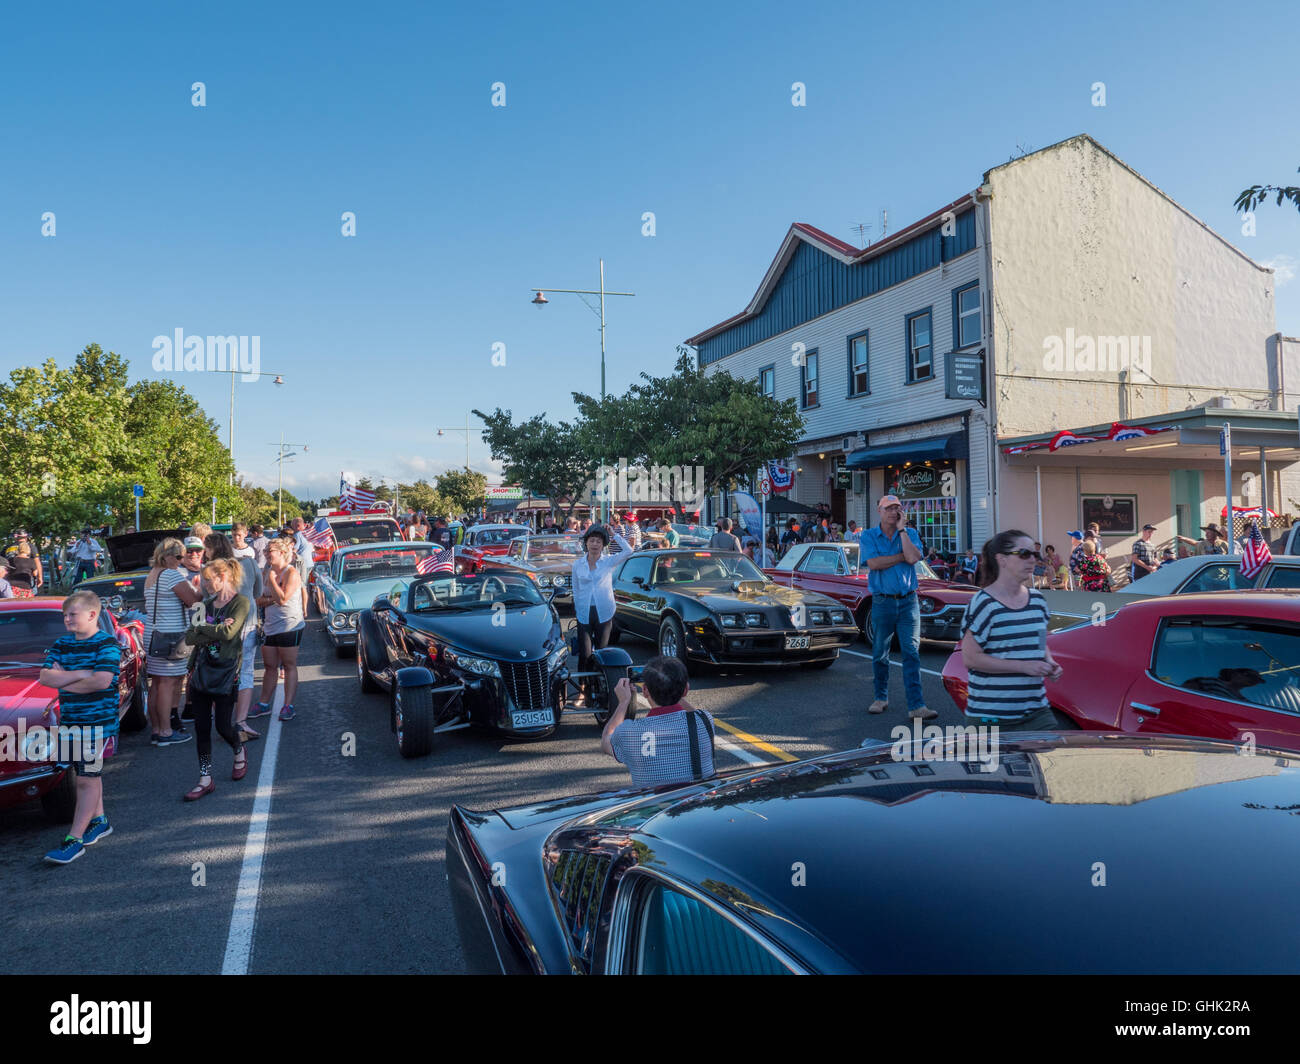 Amerikanisches Auto Kompressor Lufteinlass am Americarna Classic Car Show,  Inglewood, Neuseeland Stockfotografie - Alamy